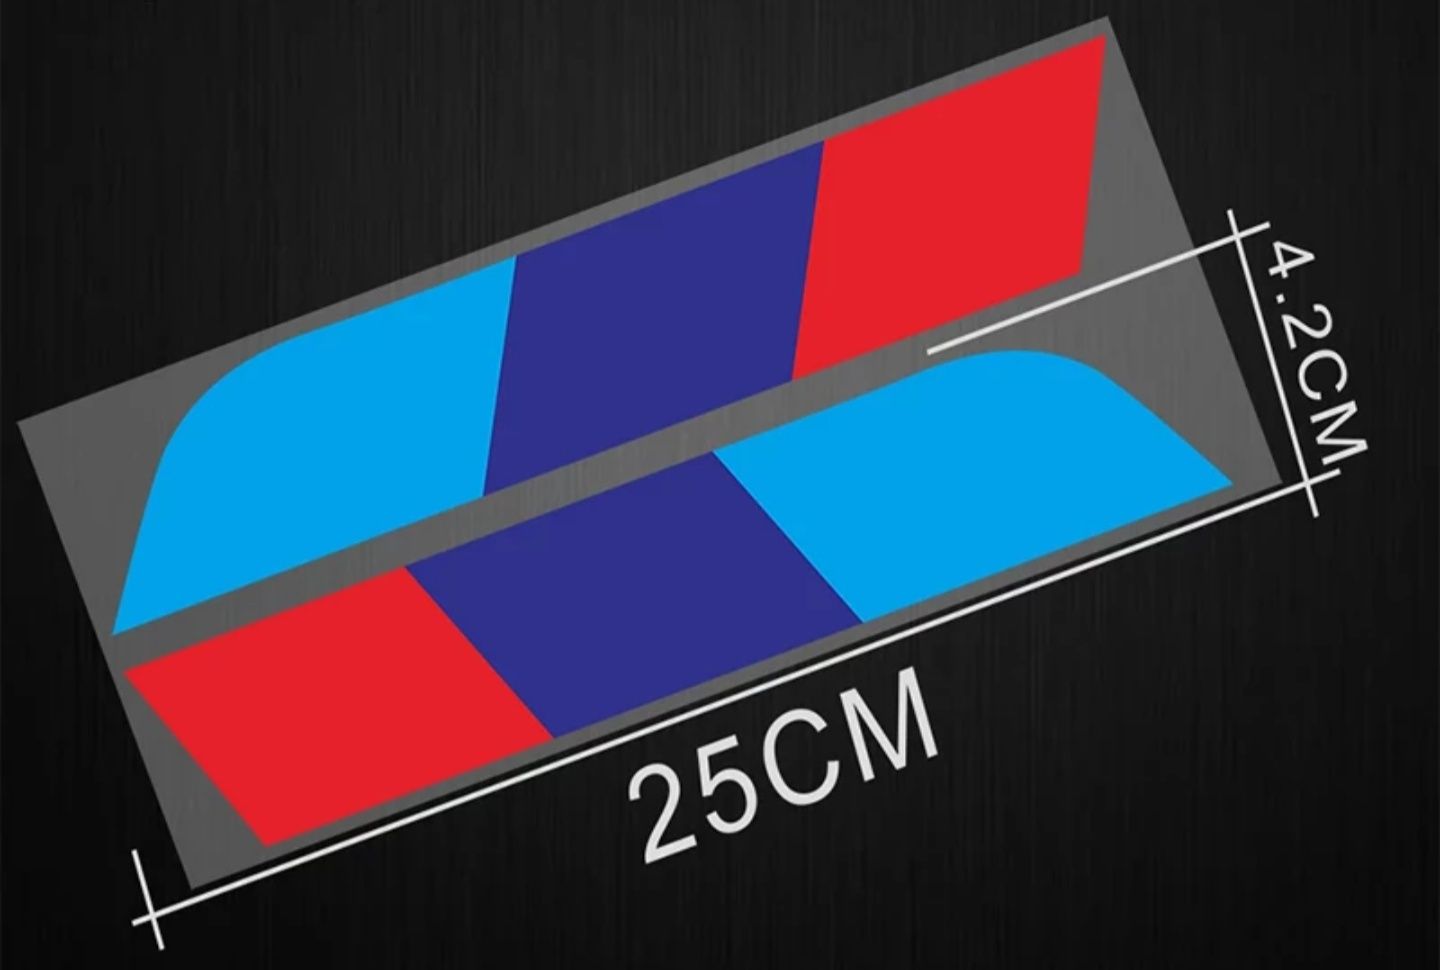 Sticker-Logo-Culori-M-Power-Performance-Bmw-Portbagaj-Spate